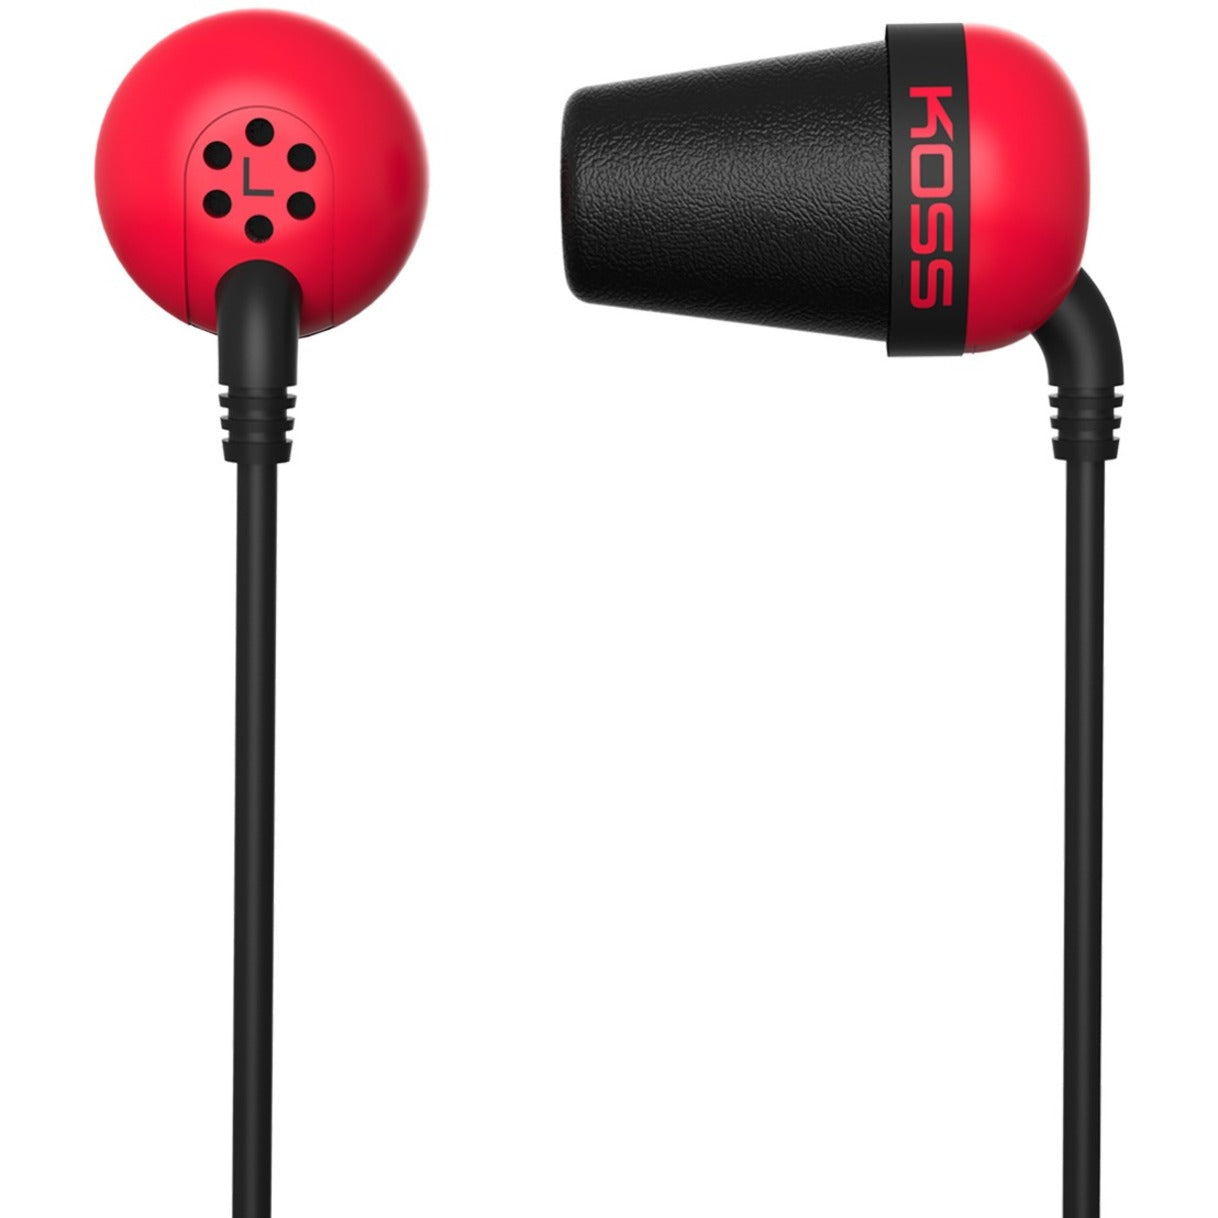 Koss PLUG R Plug Earphone, Comfortable Lightweight In-Ear Headphones with Deep Bass and Noise Isolation